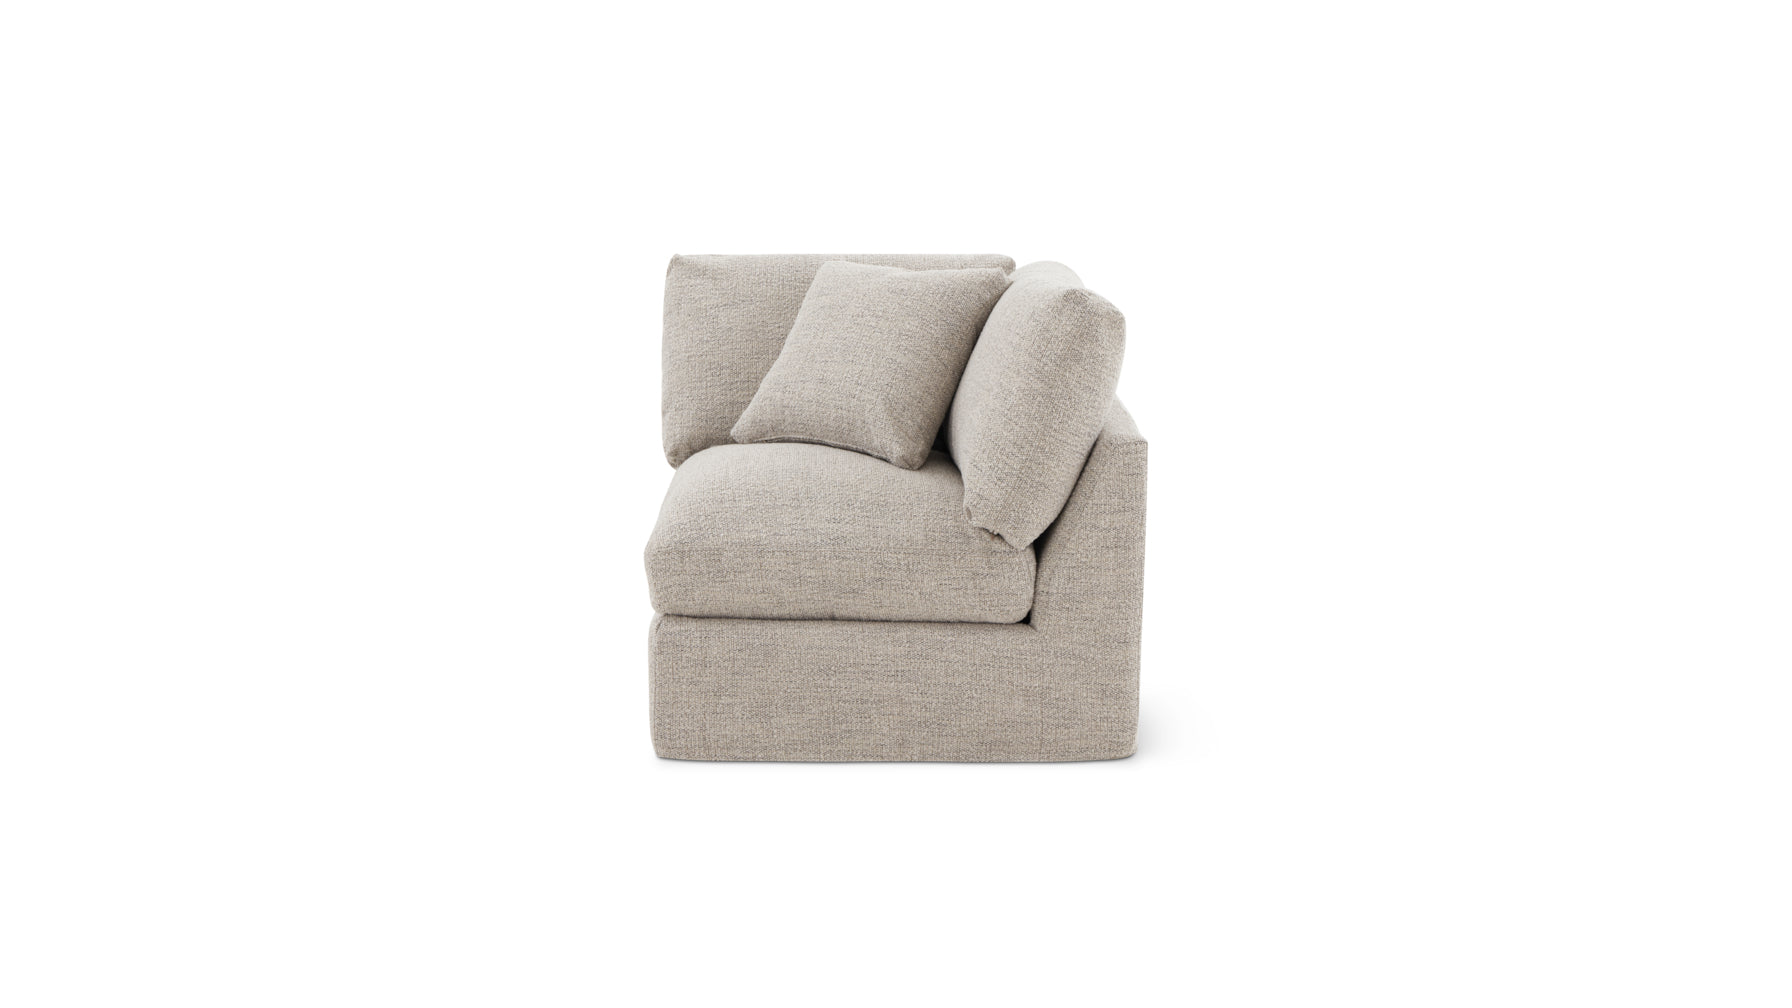 Get Together™ Corner Chair, Standard, Oatmeal - Image 1